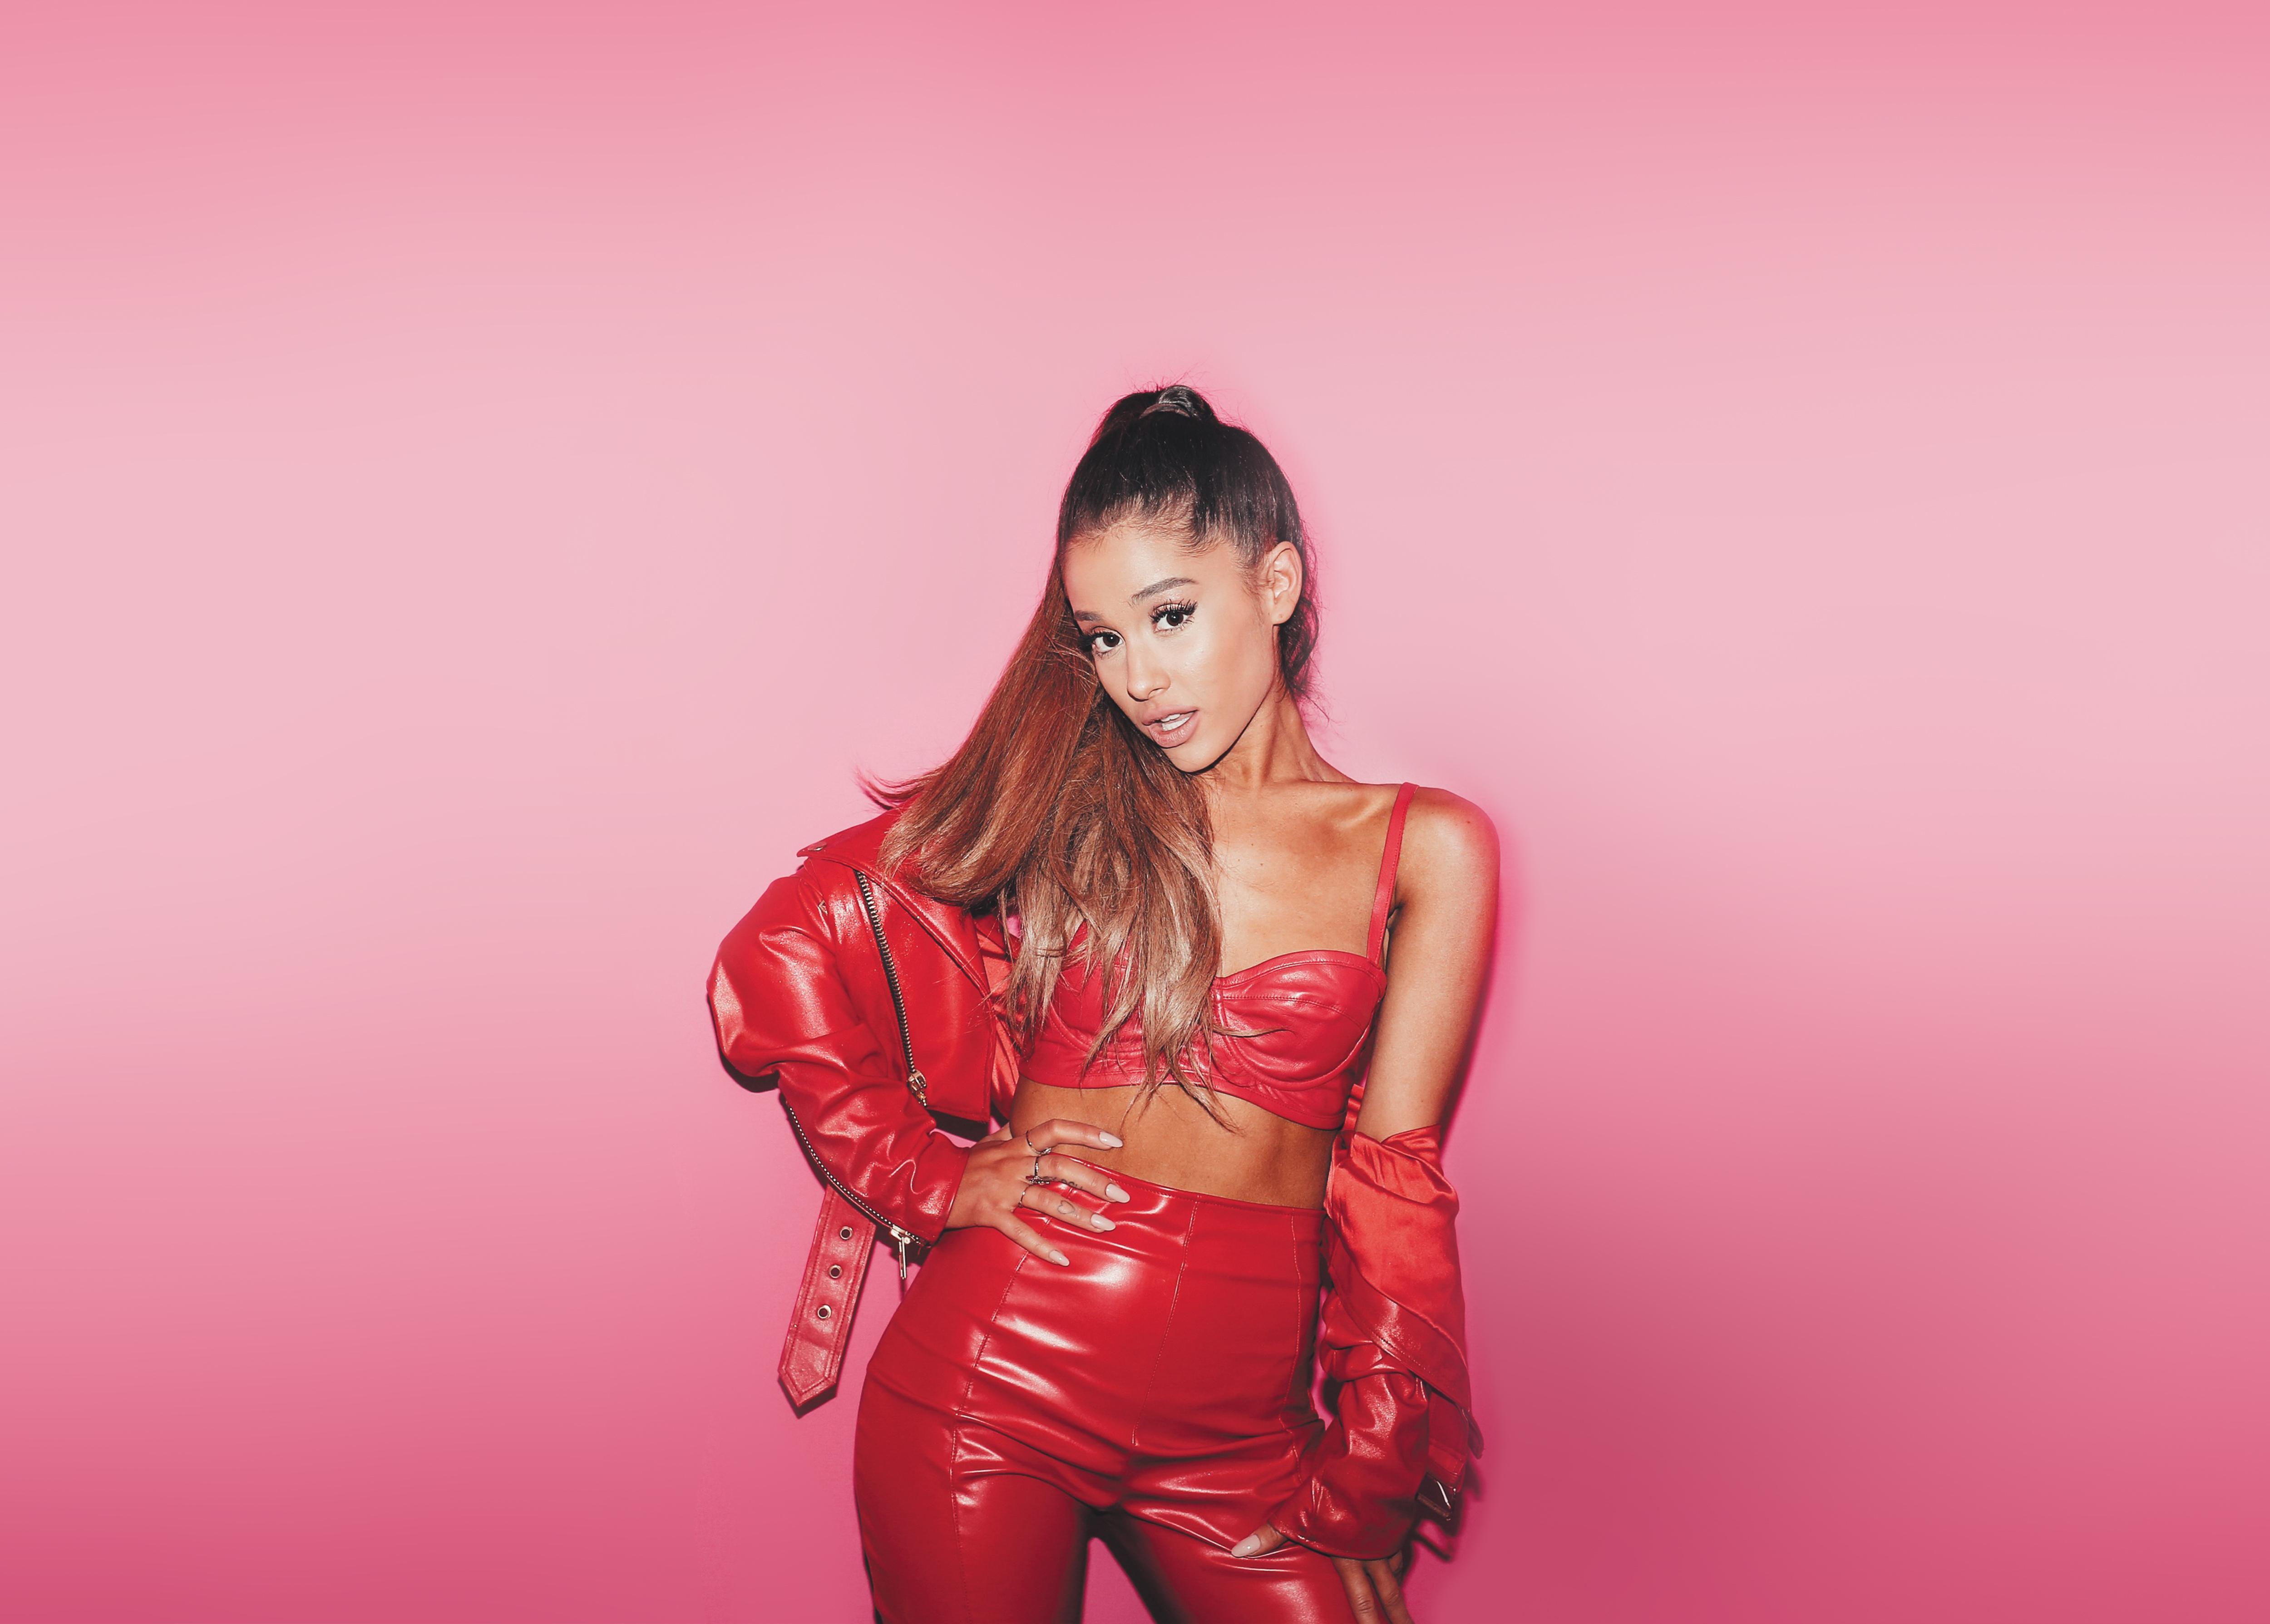 Ariana Grande 2019 Wallpapers - Wallpaper Cave